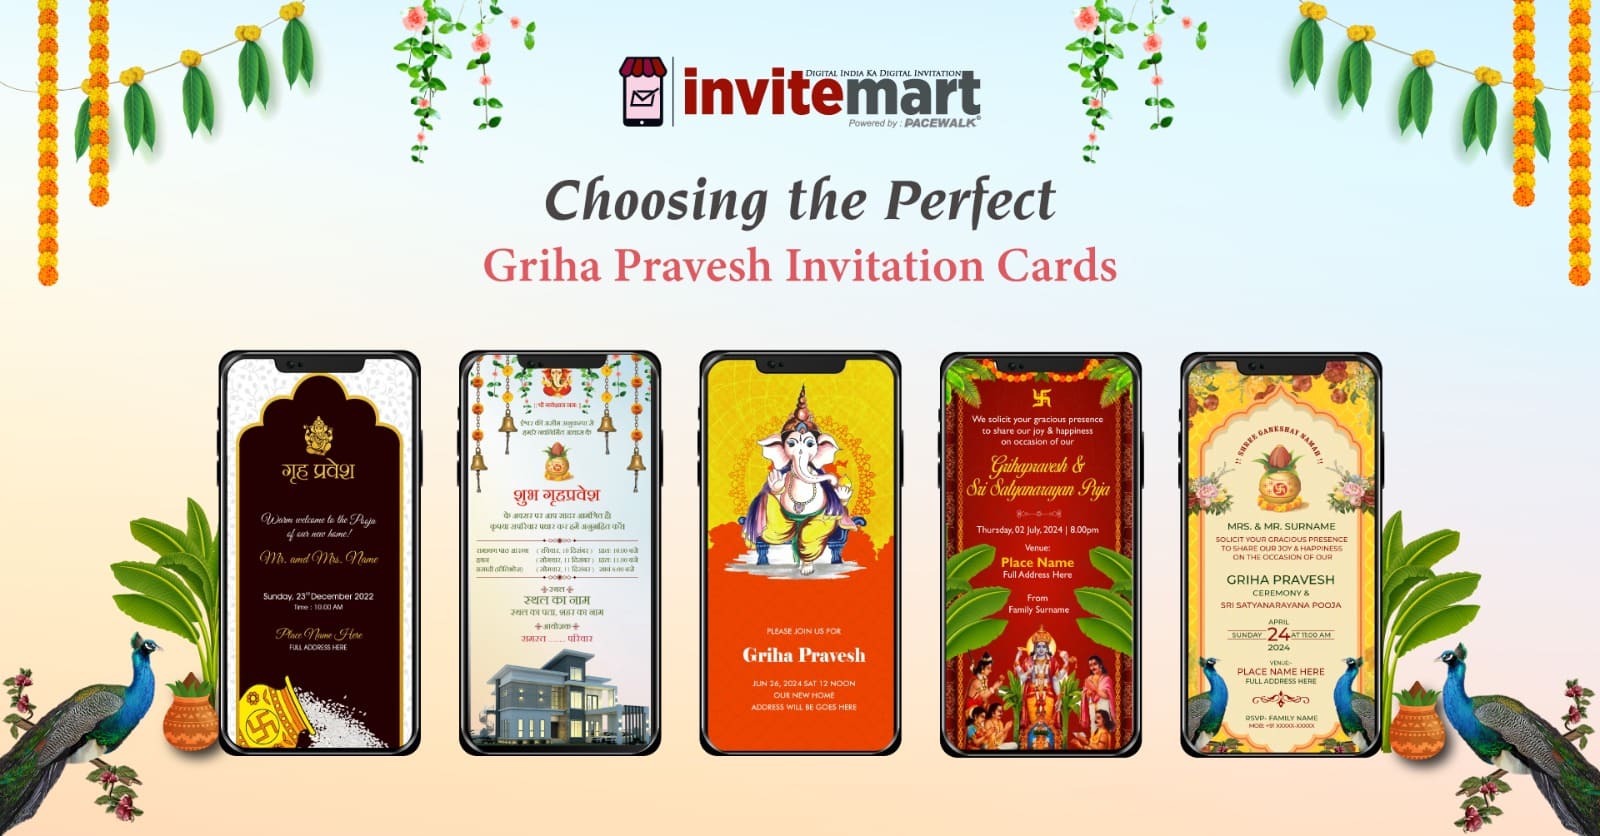 Choosing the Perfect Griha Pravesh Invitation Cards